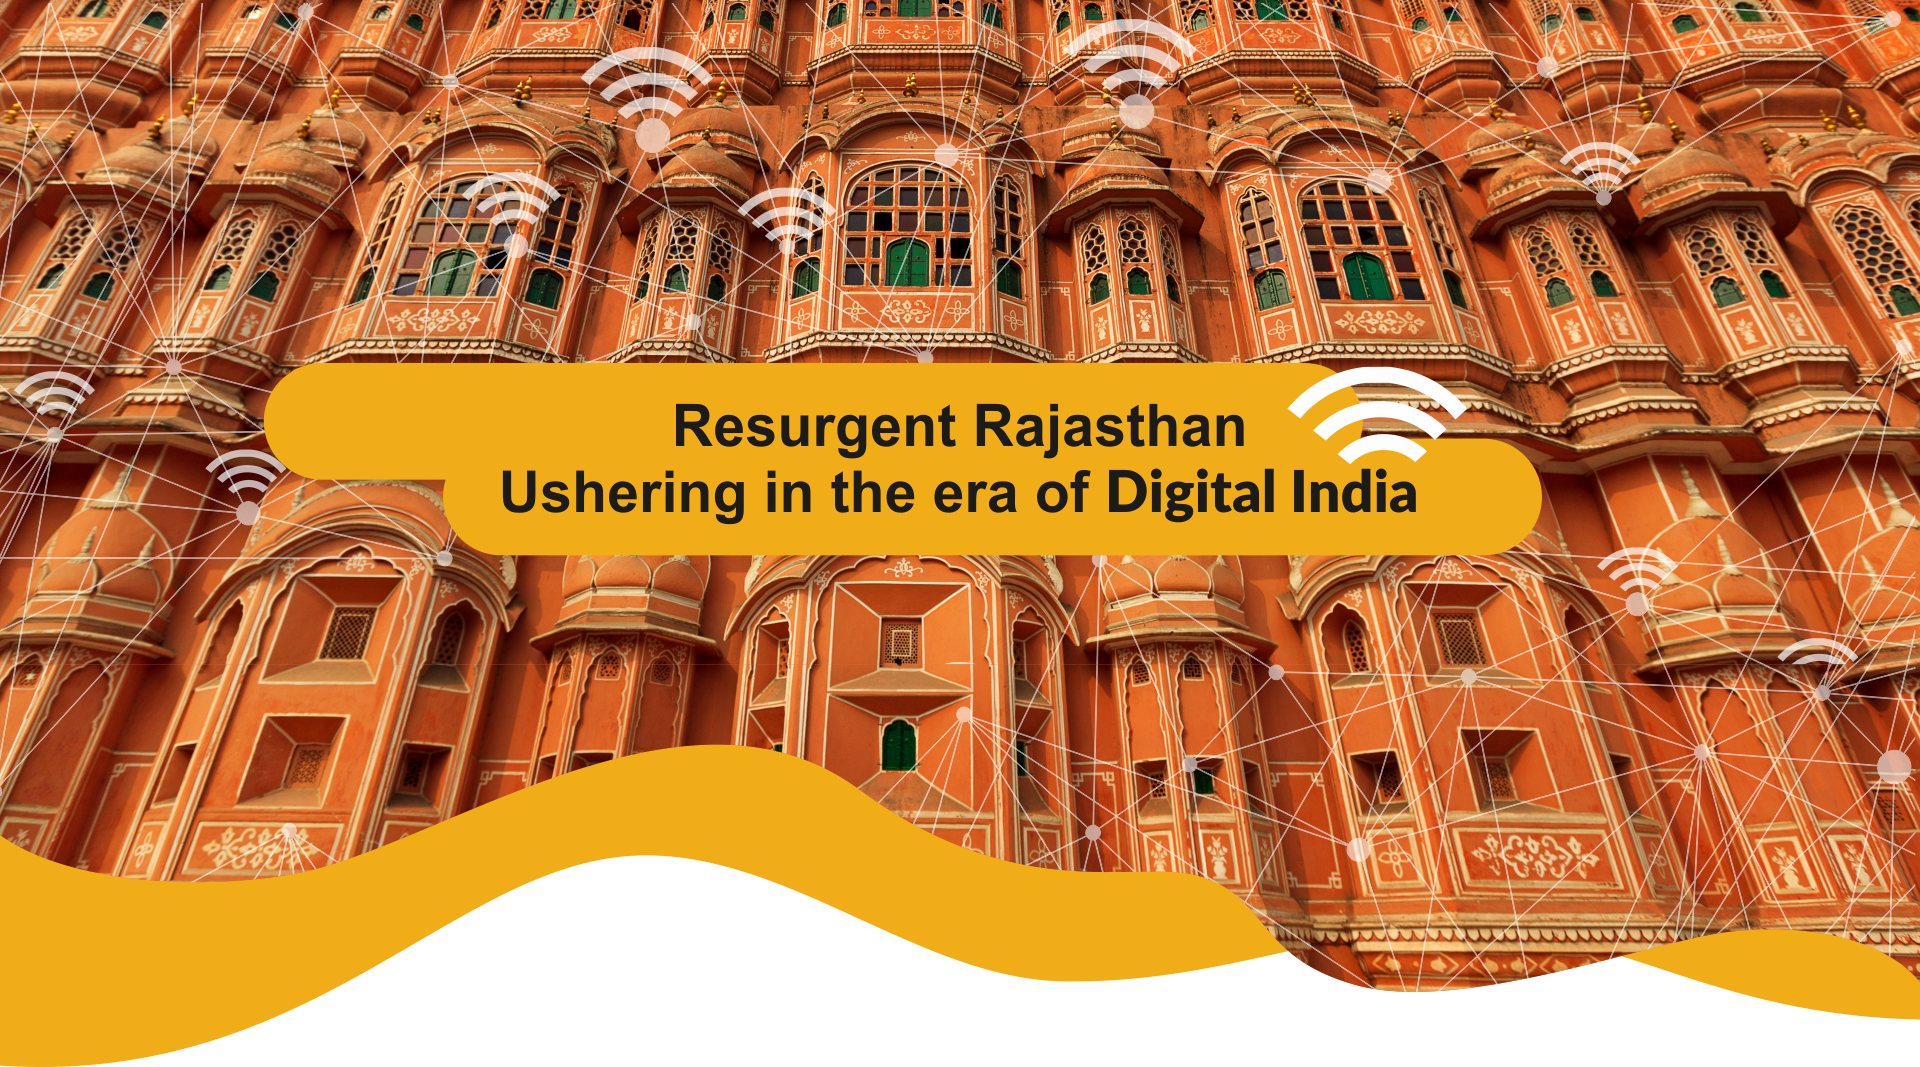 Resurgent Rajasthan Ushering in Era of Digital India